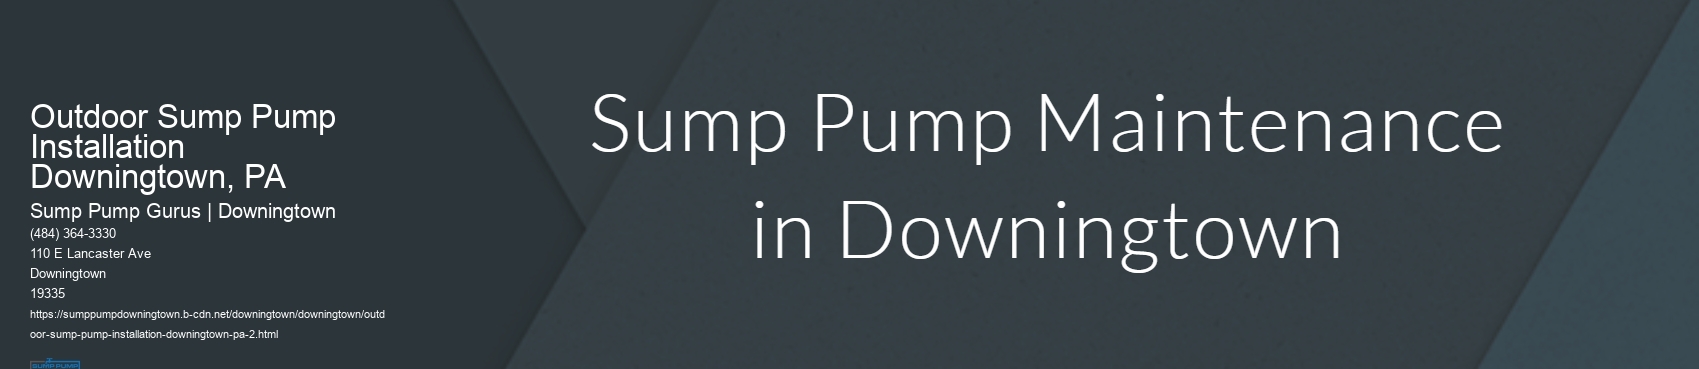 Outdoor Sump Pump Installation Downingtown, PA